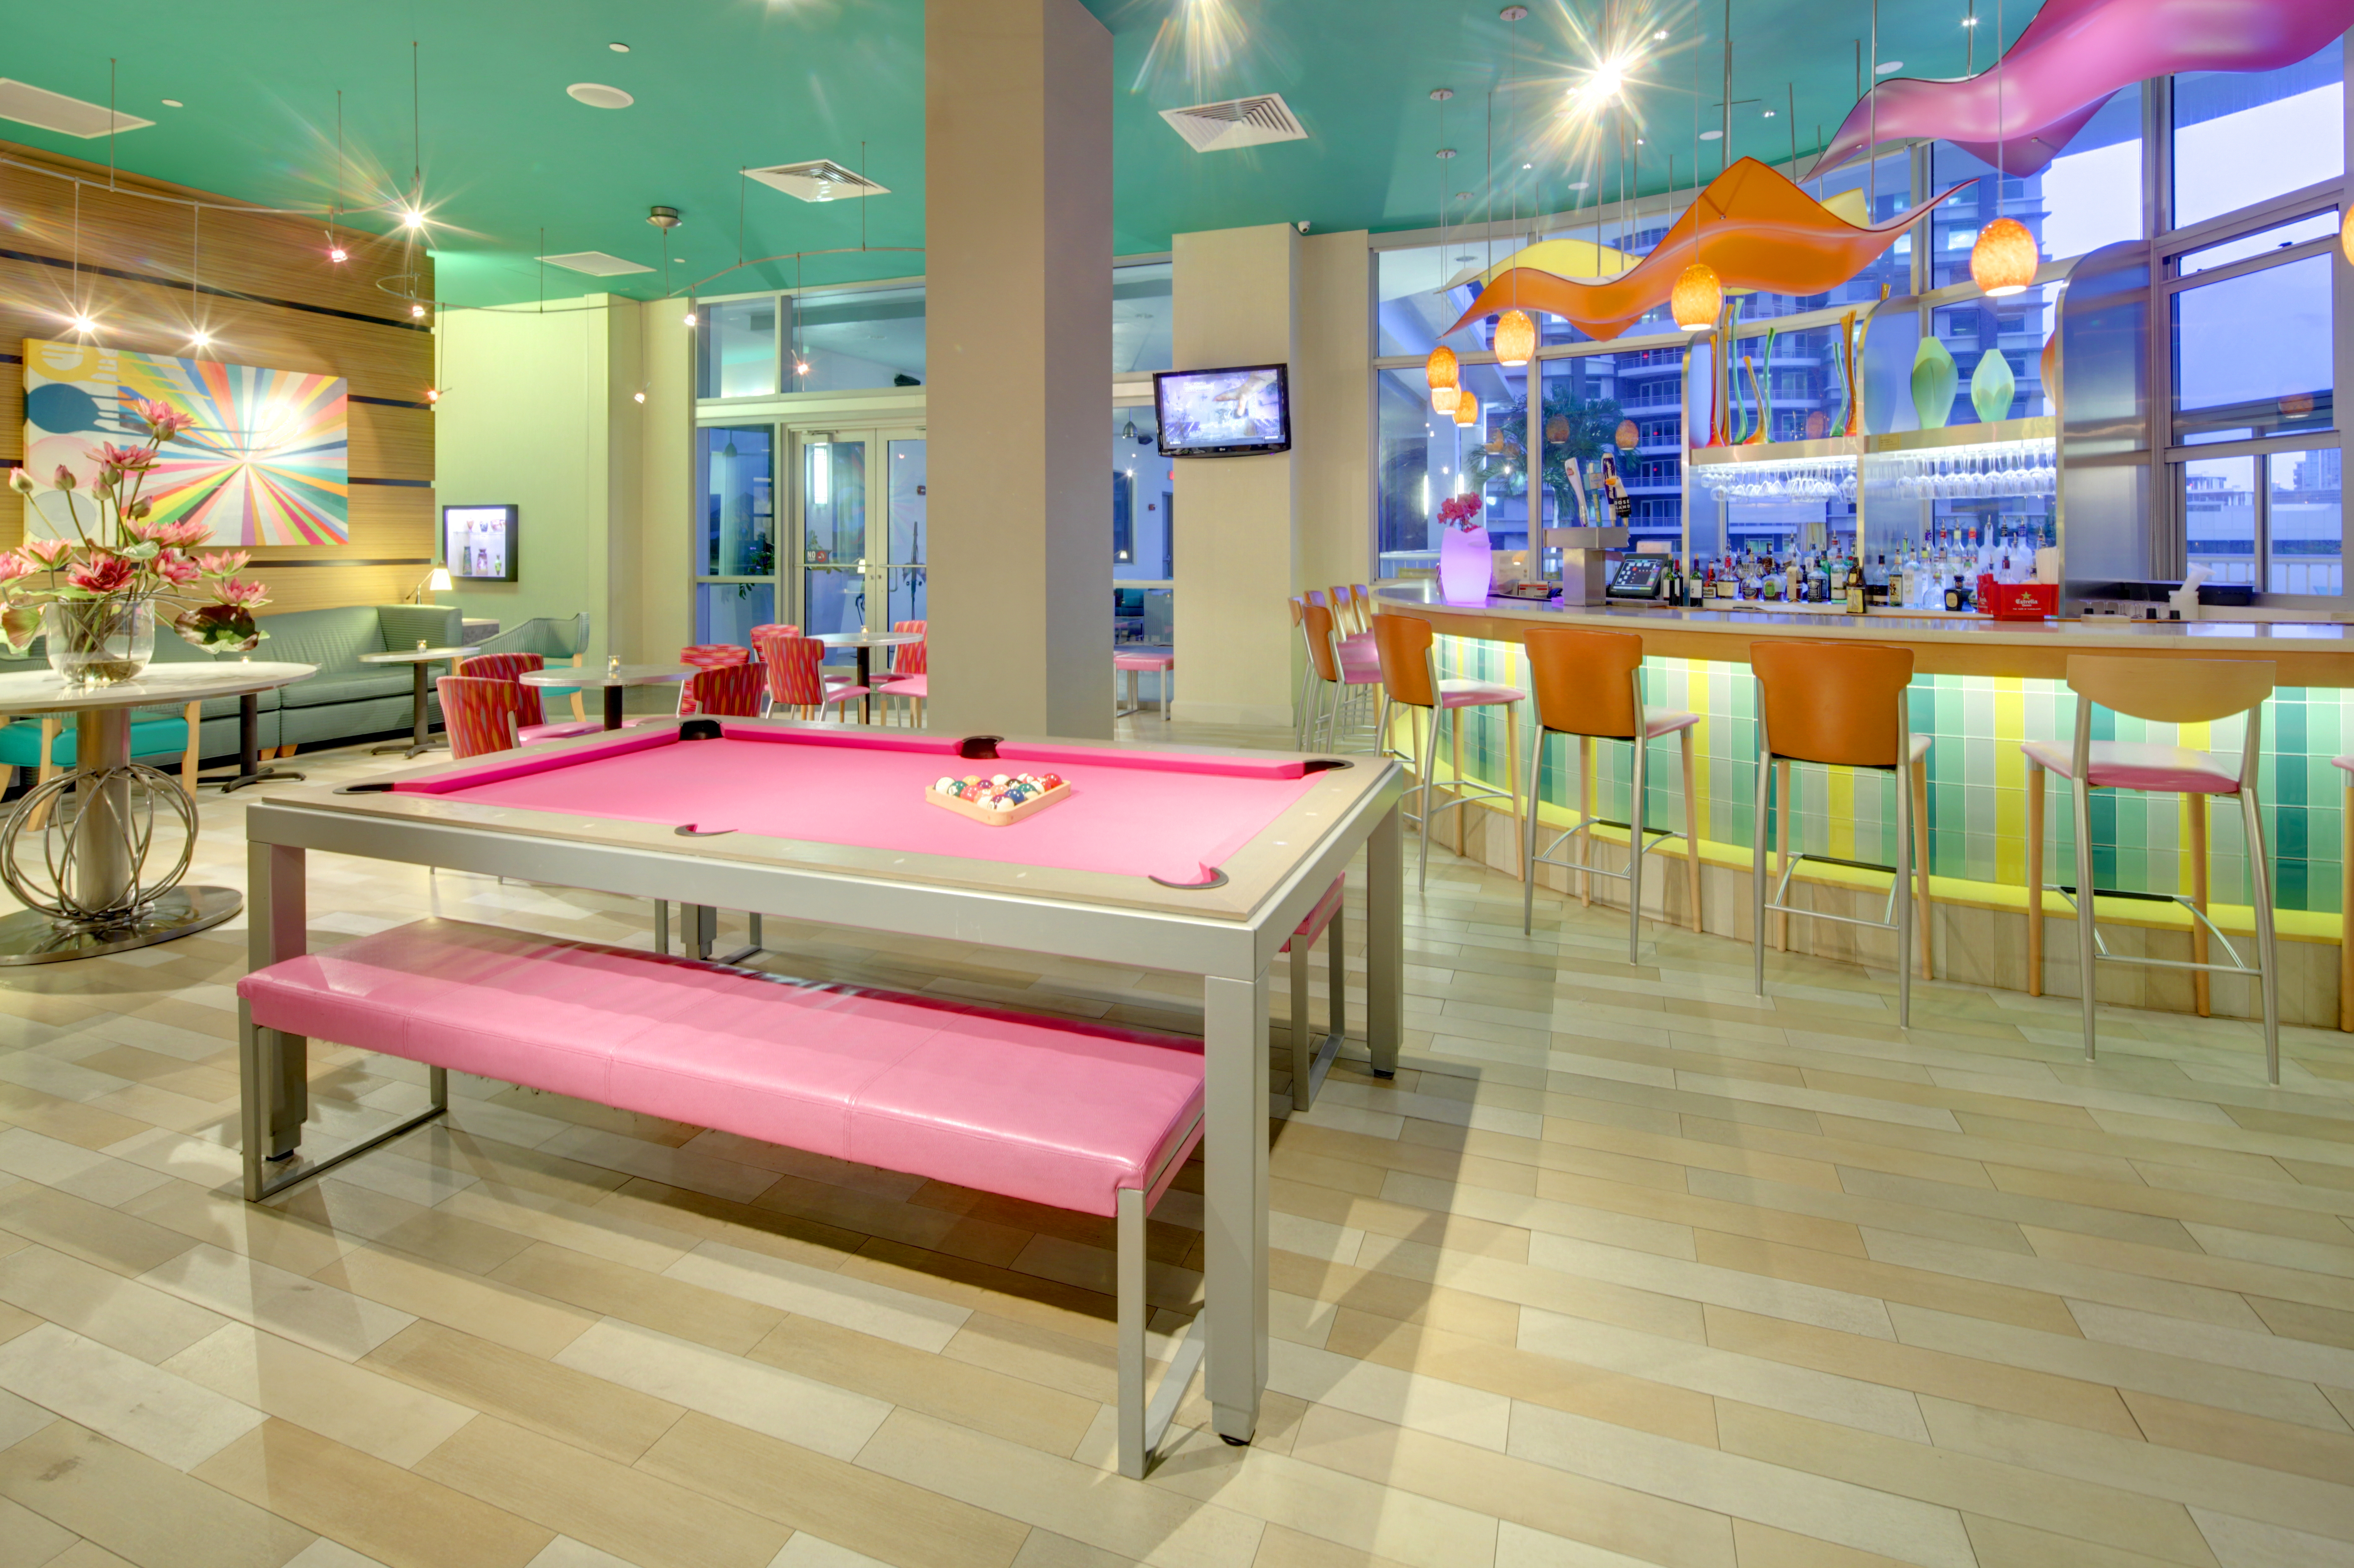 Lobby Bar and Pool Table  